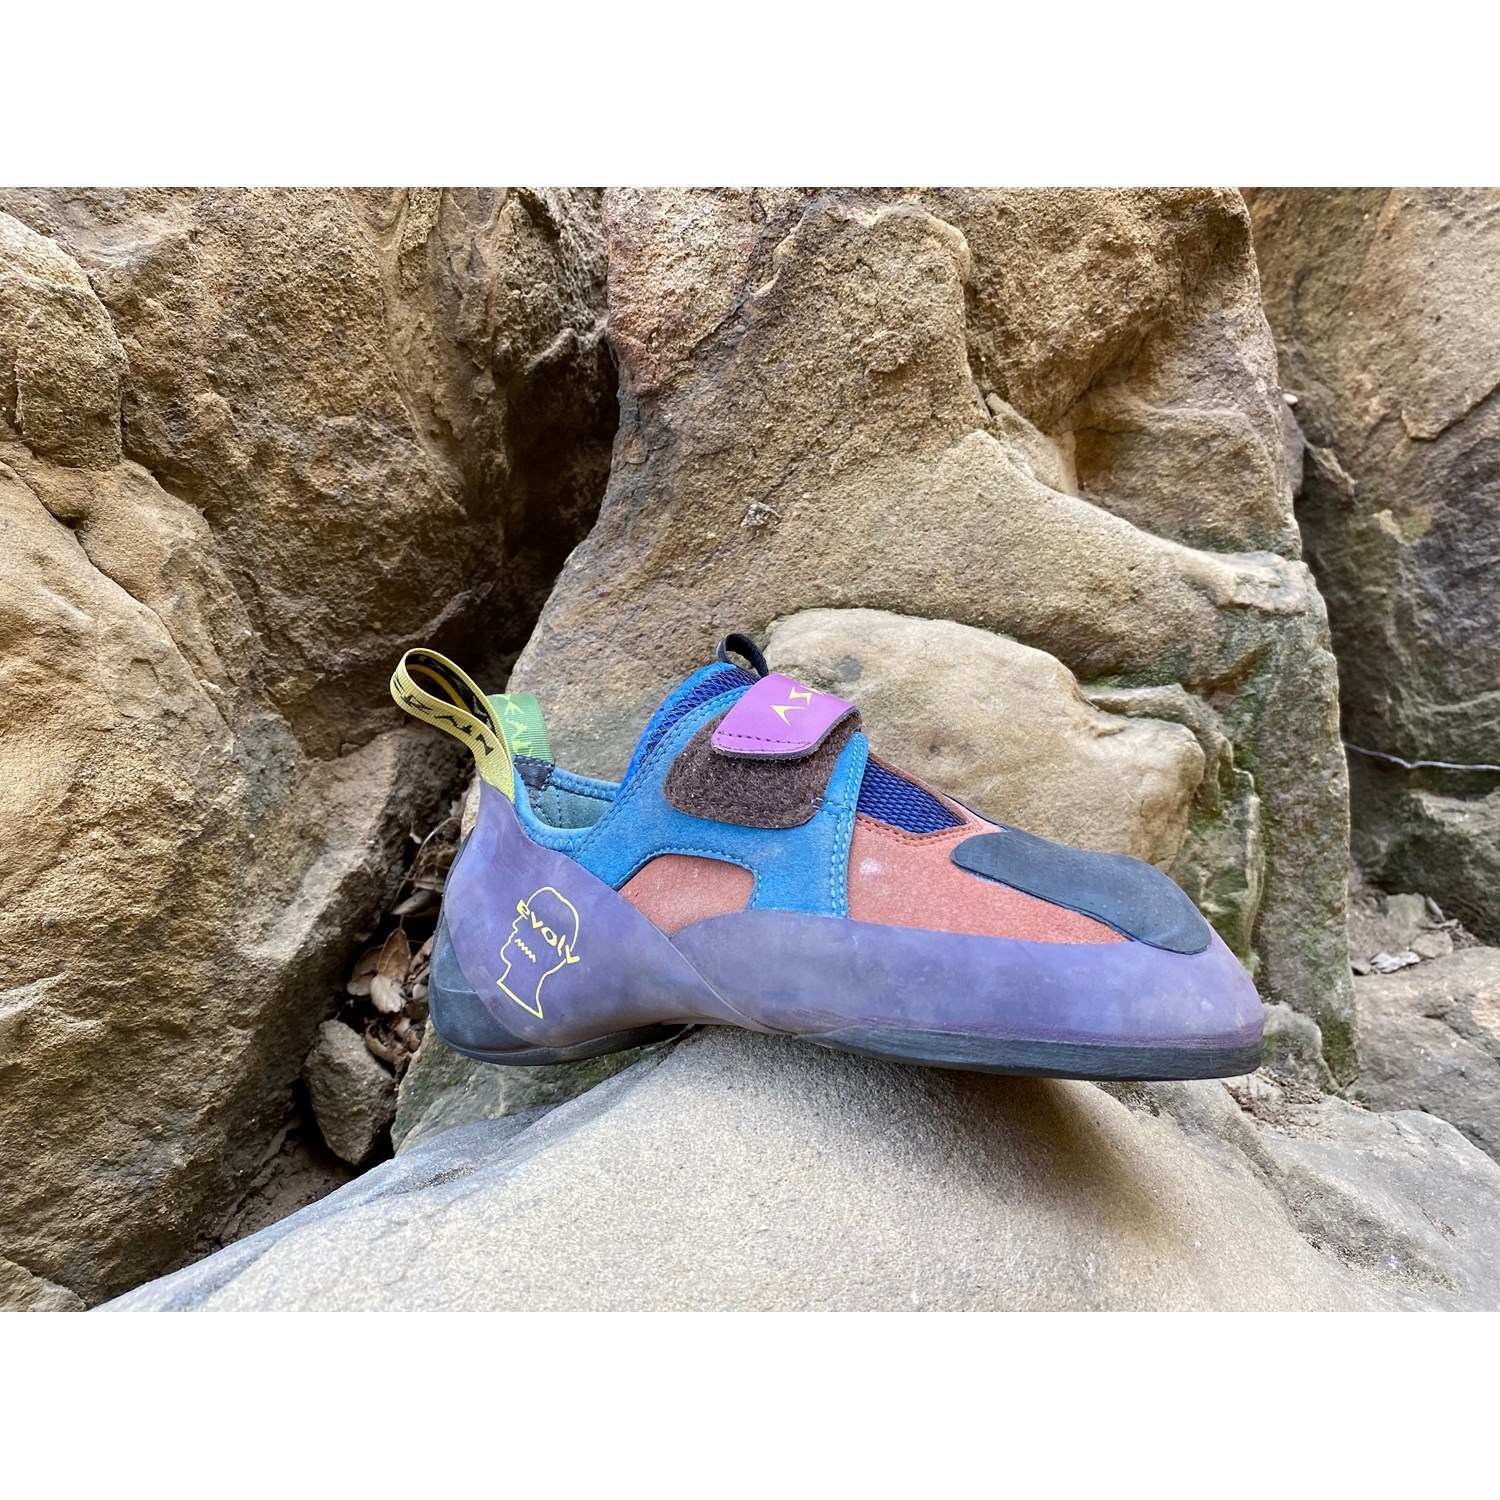 evolv rock climbing shoes